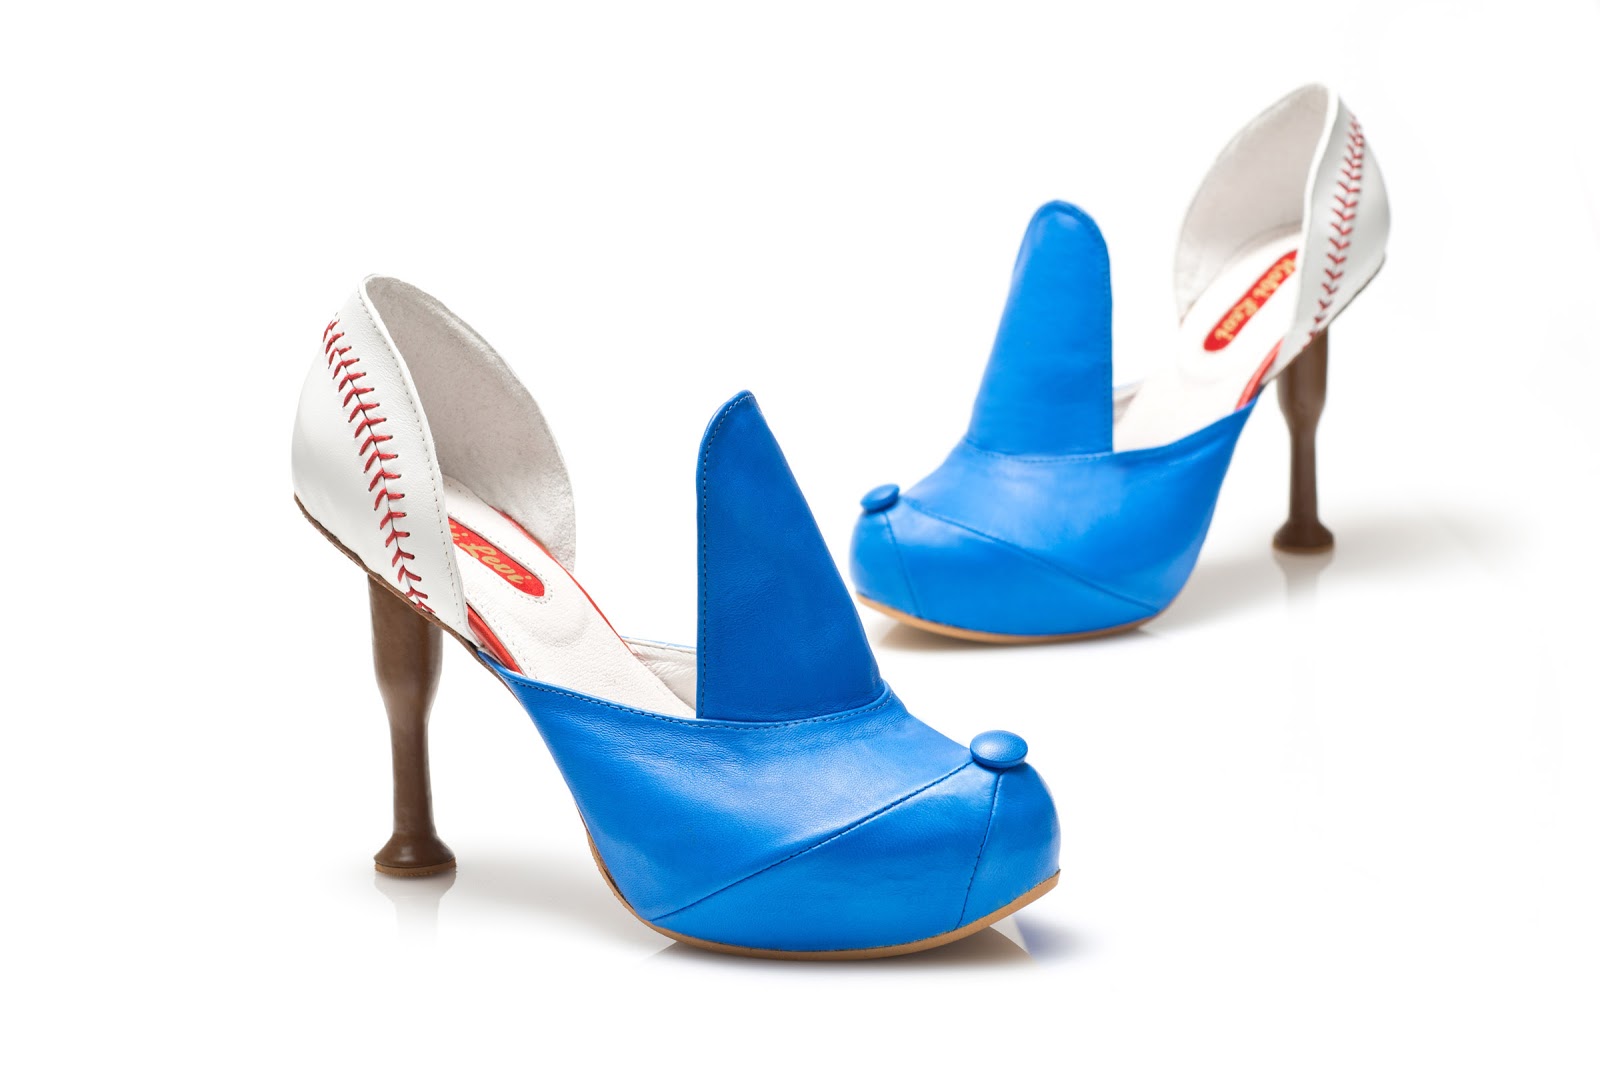 Kobi Levi- Footwear Design: Baseball Cap